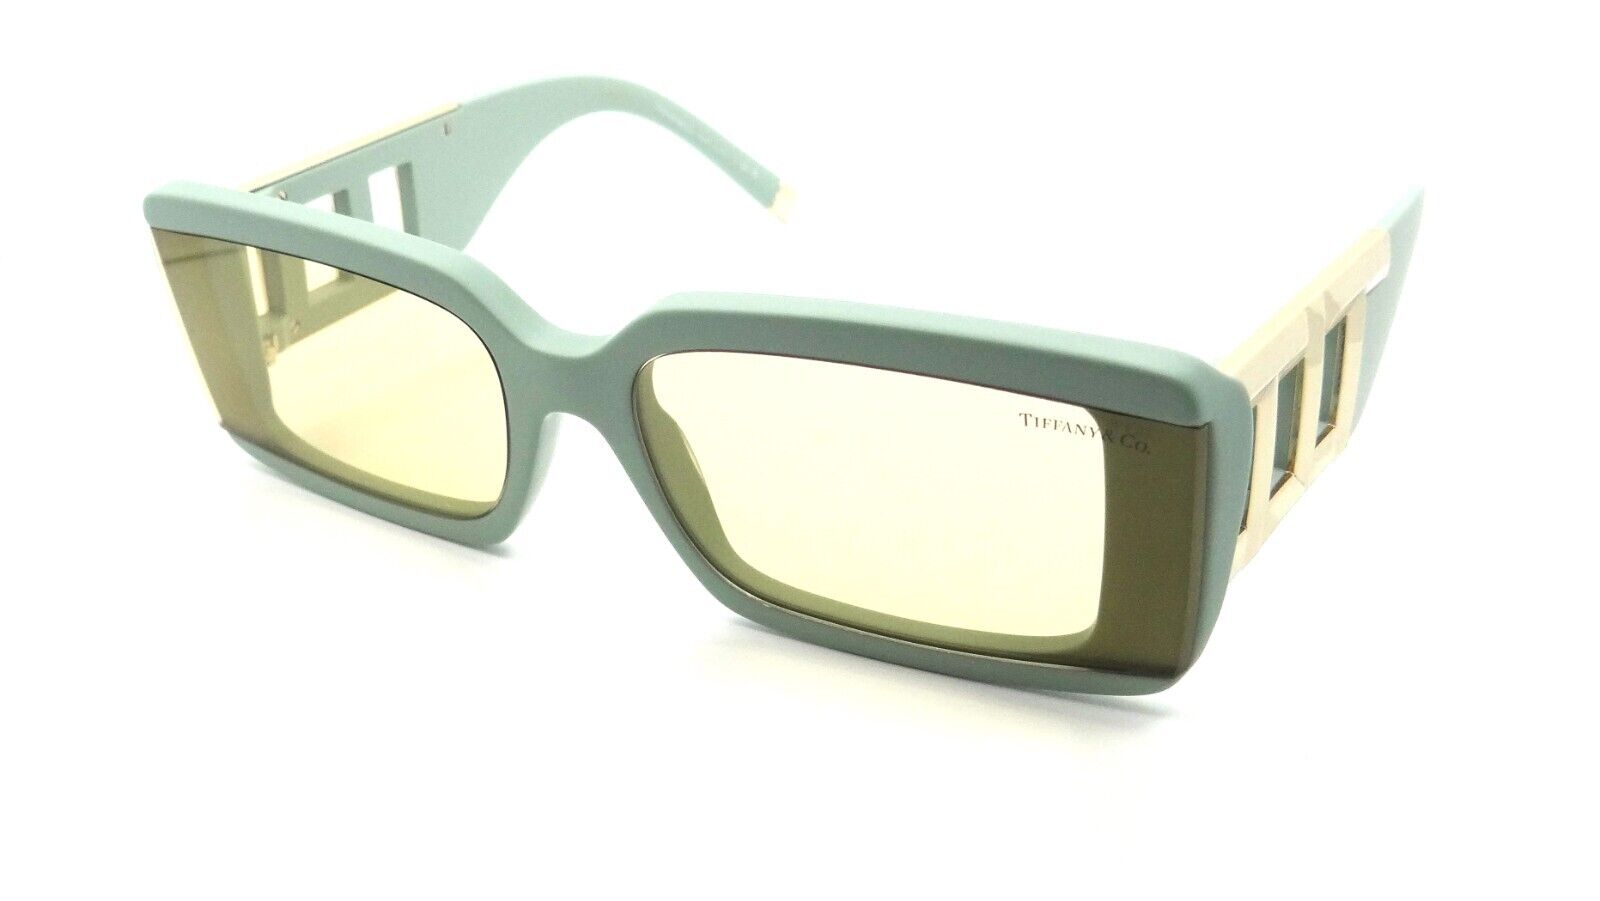 Tiffany & Co Sunglasses TF 4197 8365/8 62-17-140 Matte Sage Green / Light Yellow-8056597763356-classypw.com-1